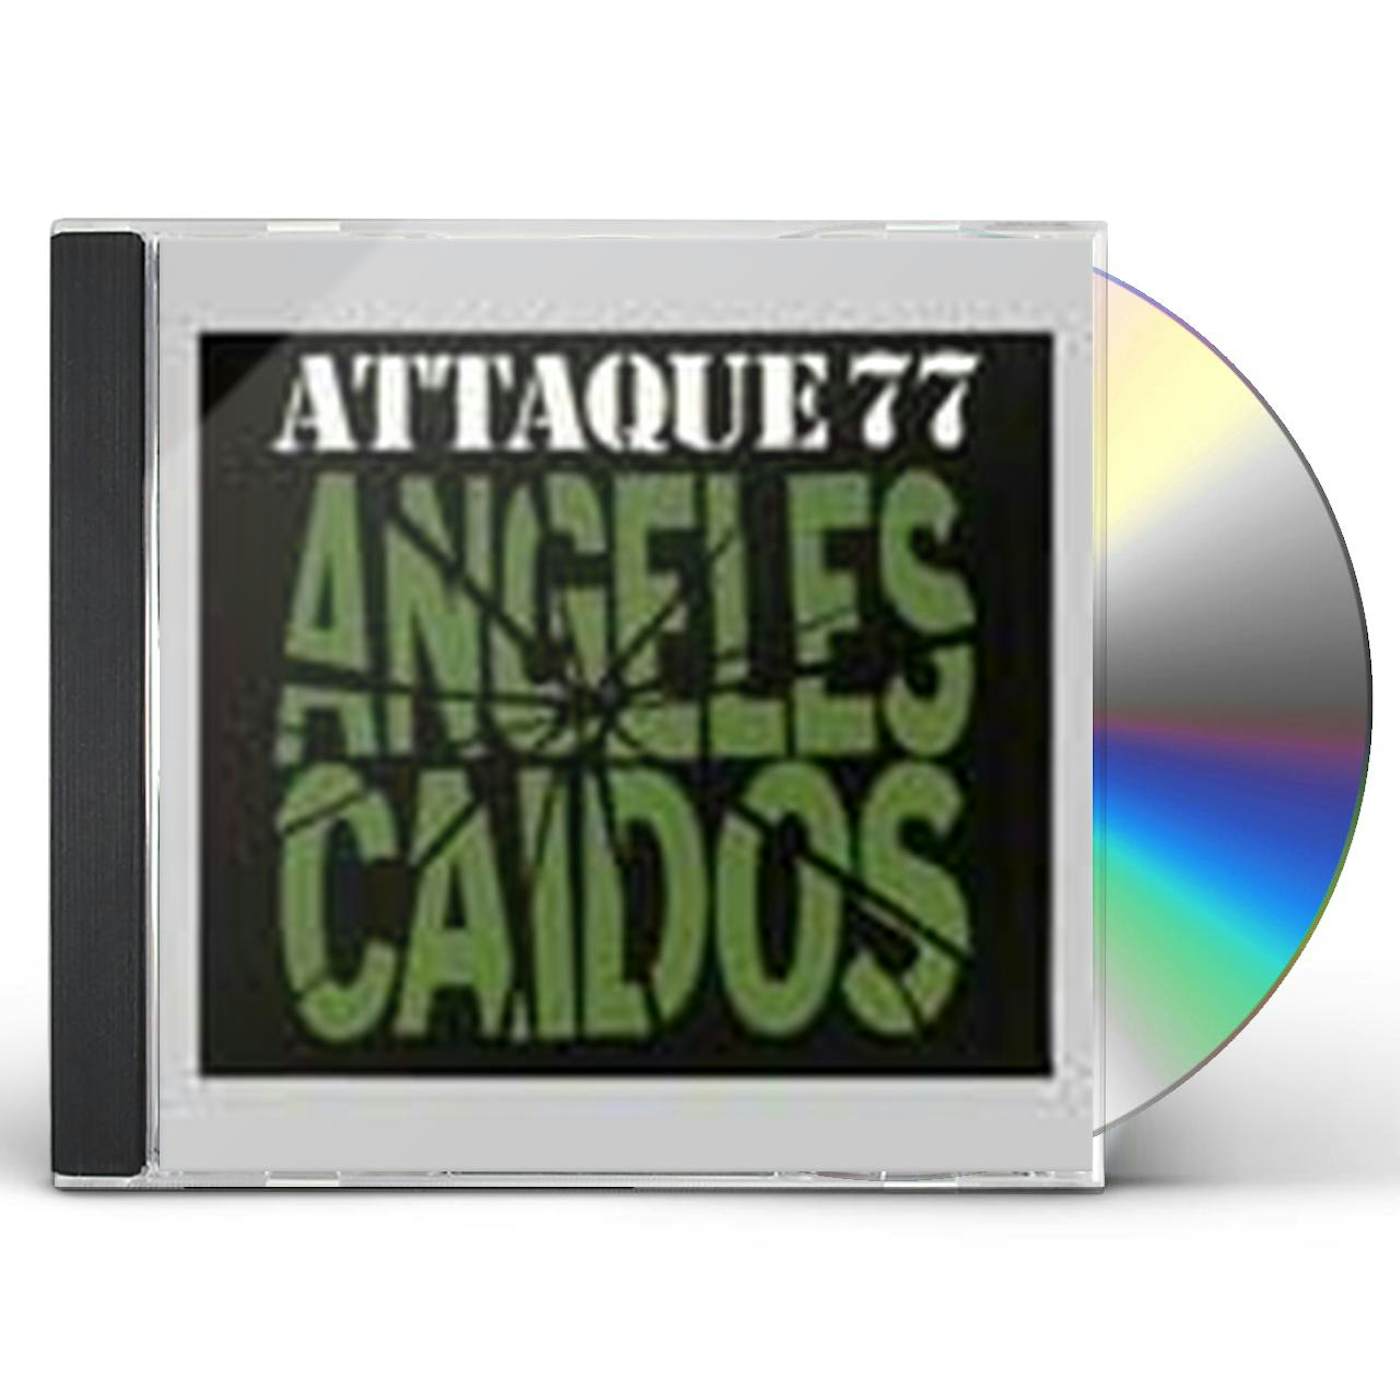 Attaque 77 ANGELES CAIDOS CD